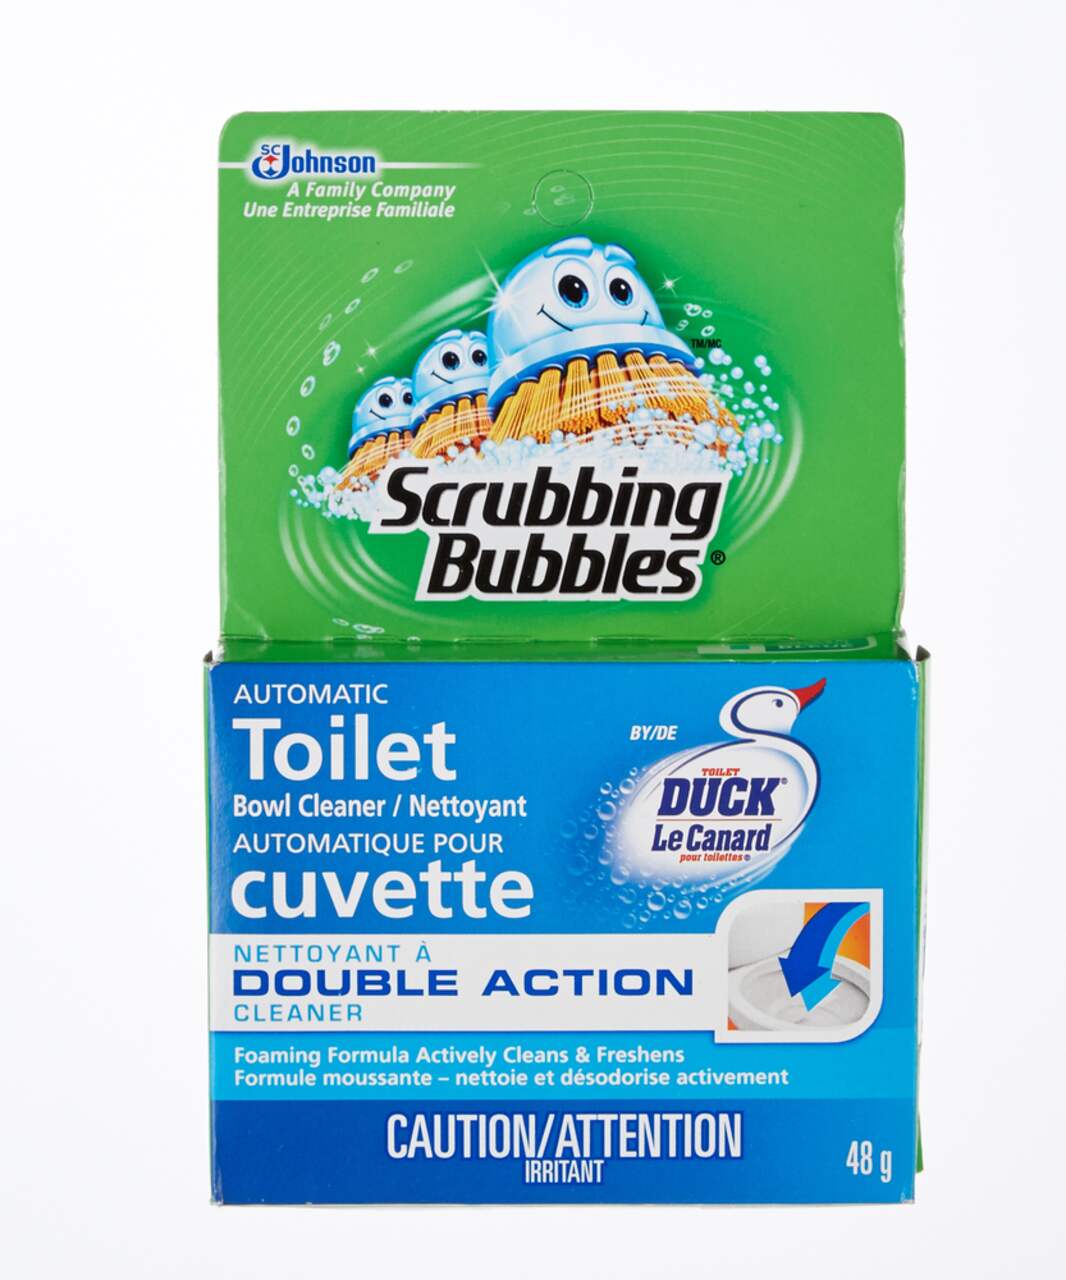 Scrubbing Bubbles Toilet Duck Puck